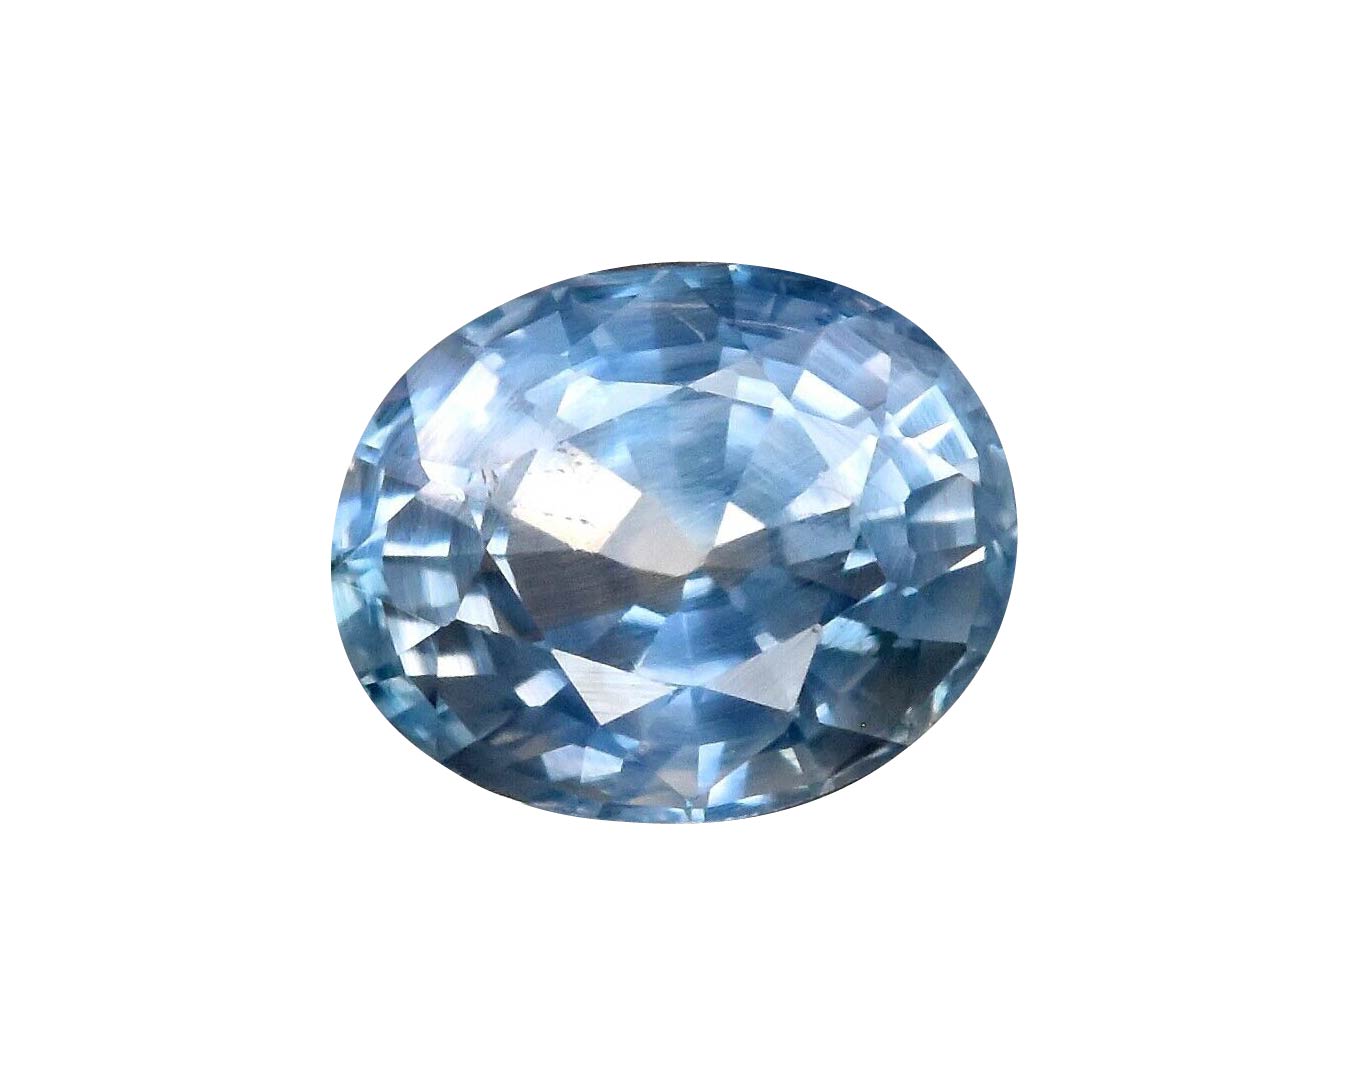 Piedra Zafiro Azul 0.81cts S-1764